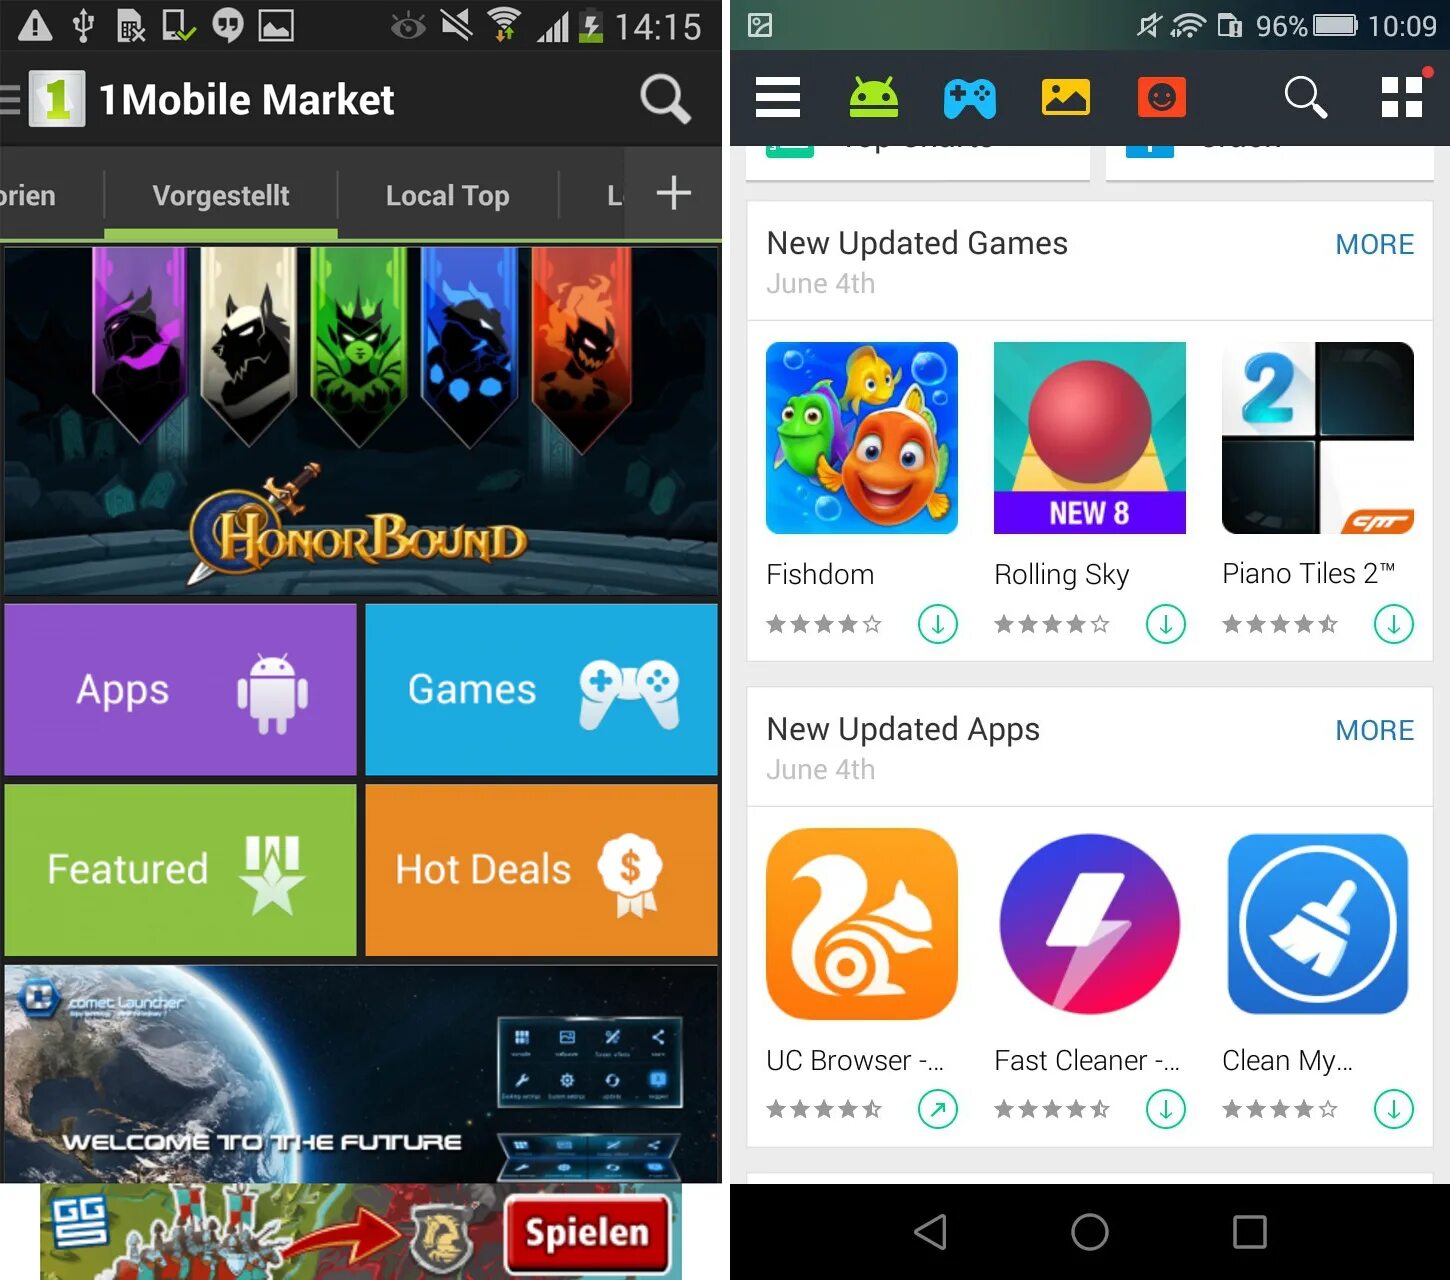 Андроид Маркет. 1 Мобильный Маркет. Android Market приложение. Магазин 1 mobile. Андроид маркет игры на телефон